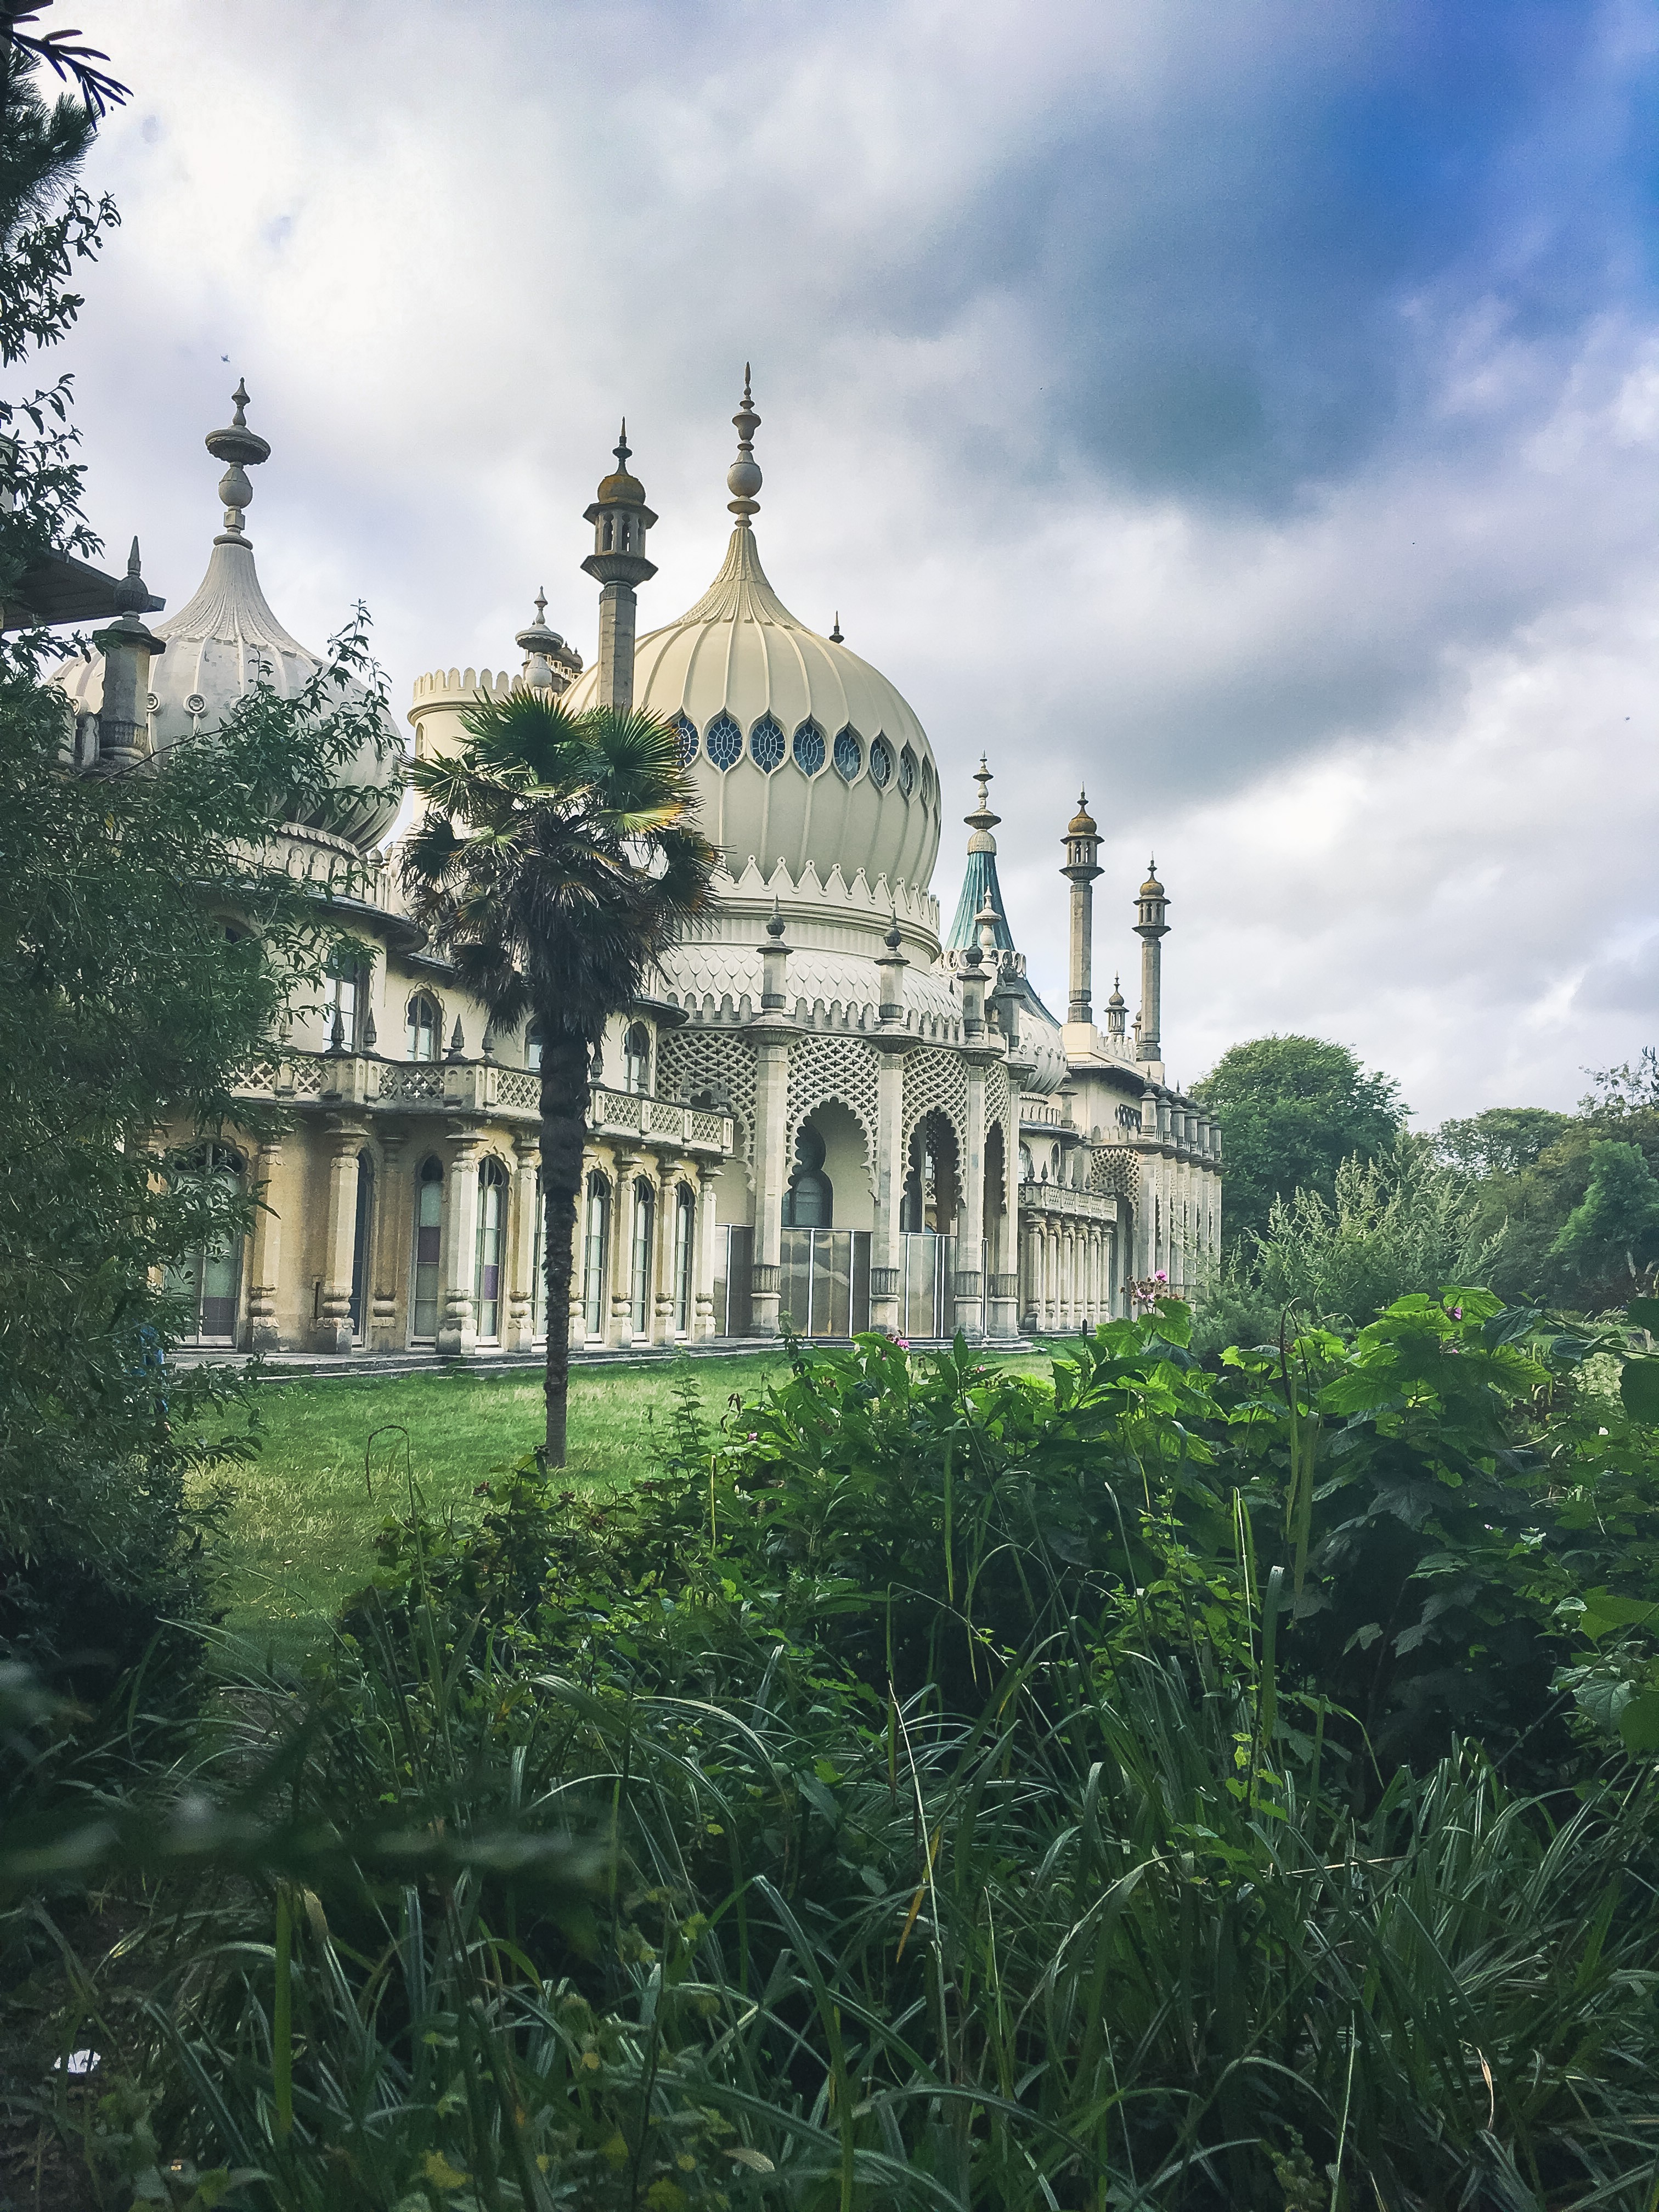 The beautiful Royal Pavilion in Brighton